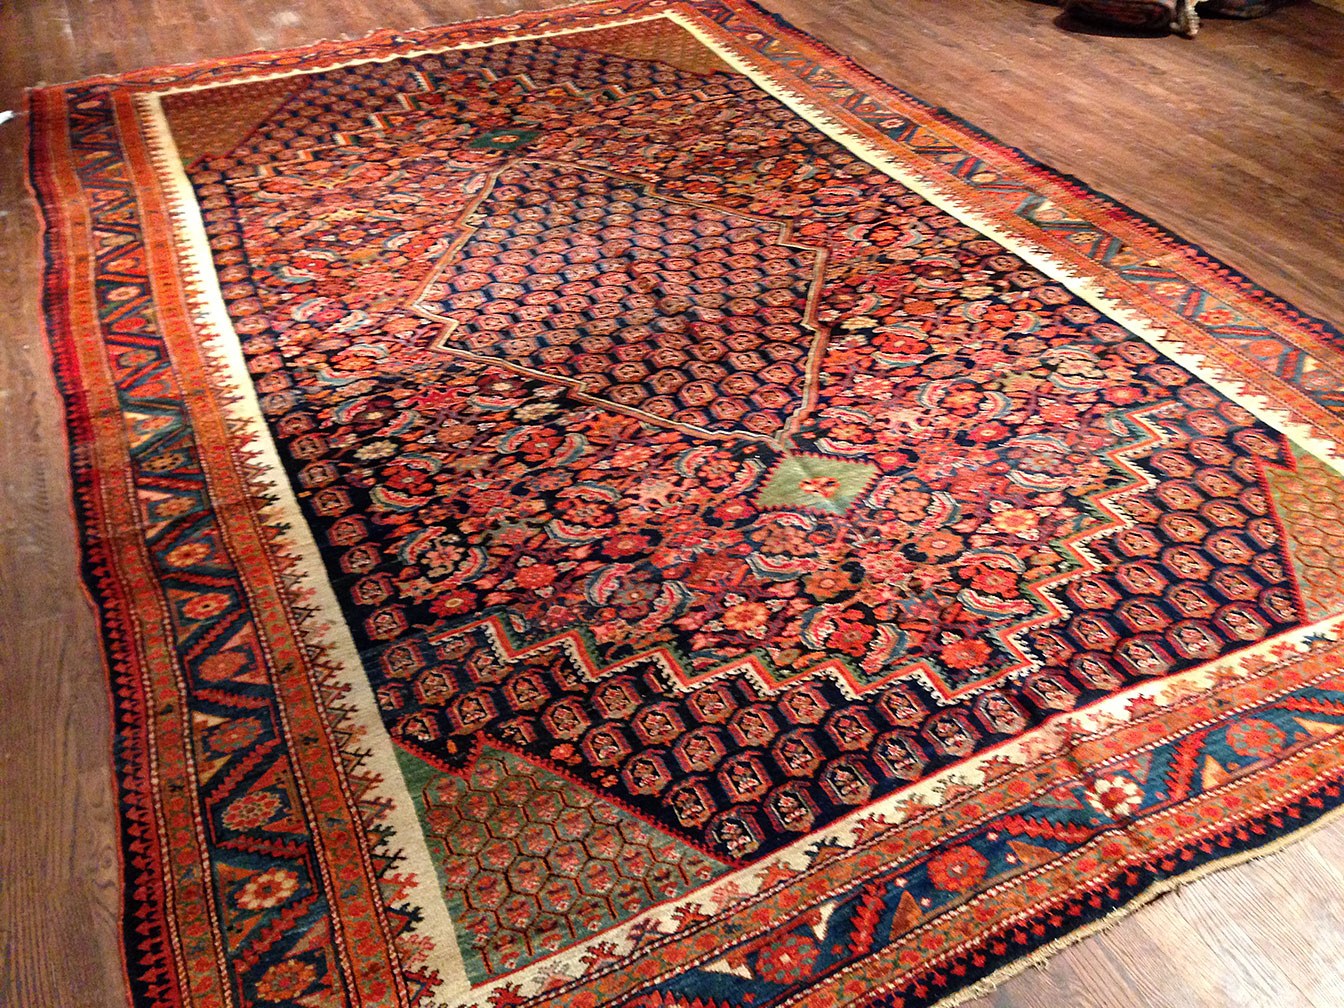 Antique malayer Carpet - # 9095